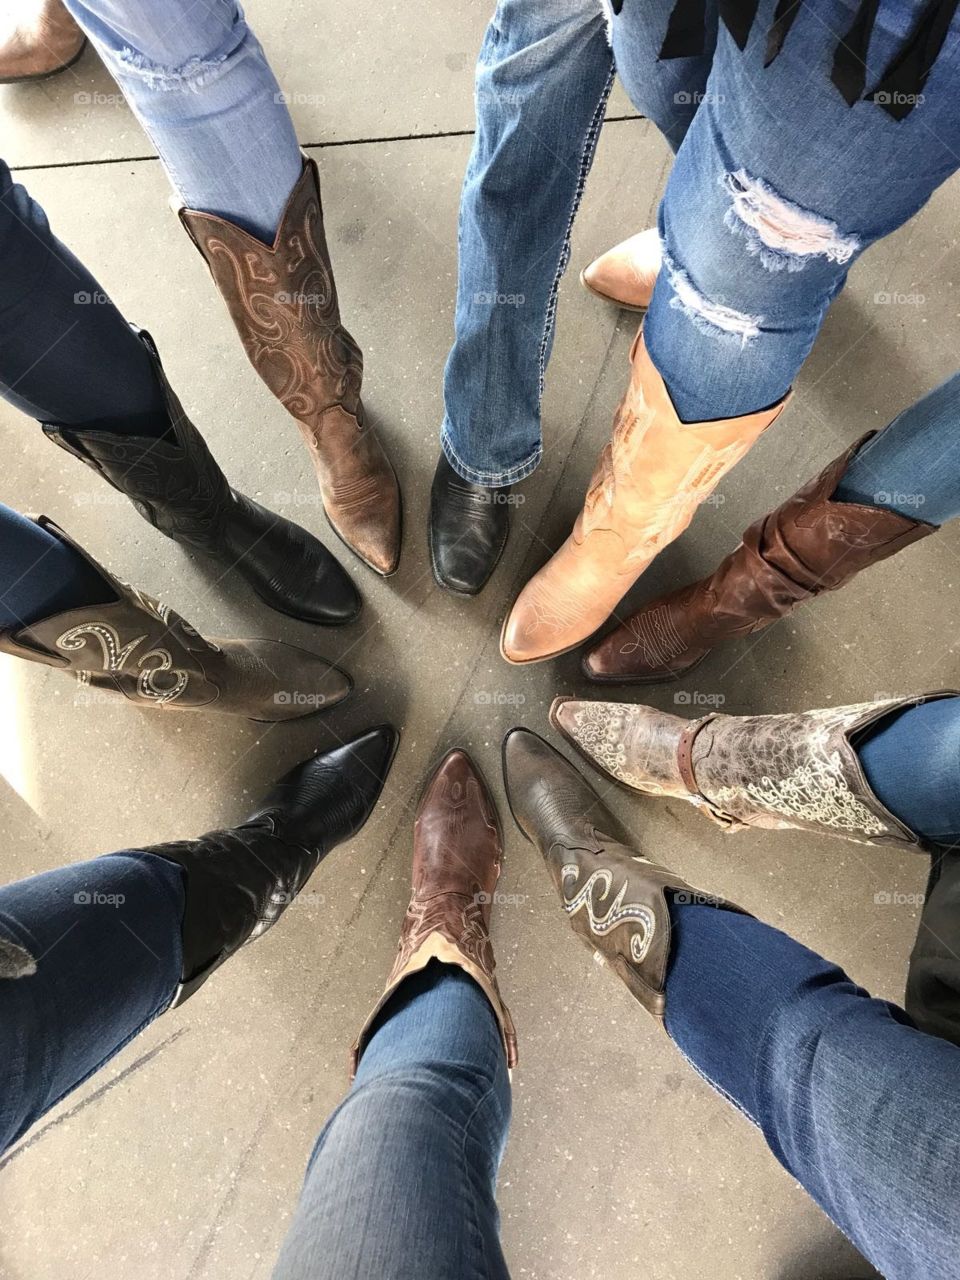 Friends wearing cowboy boots.